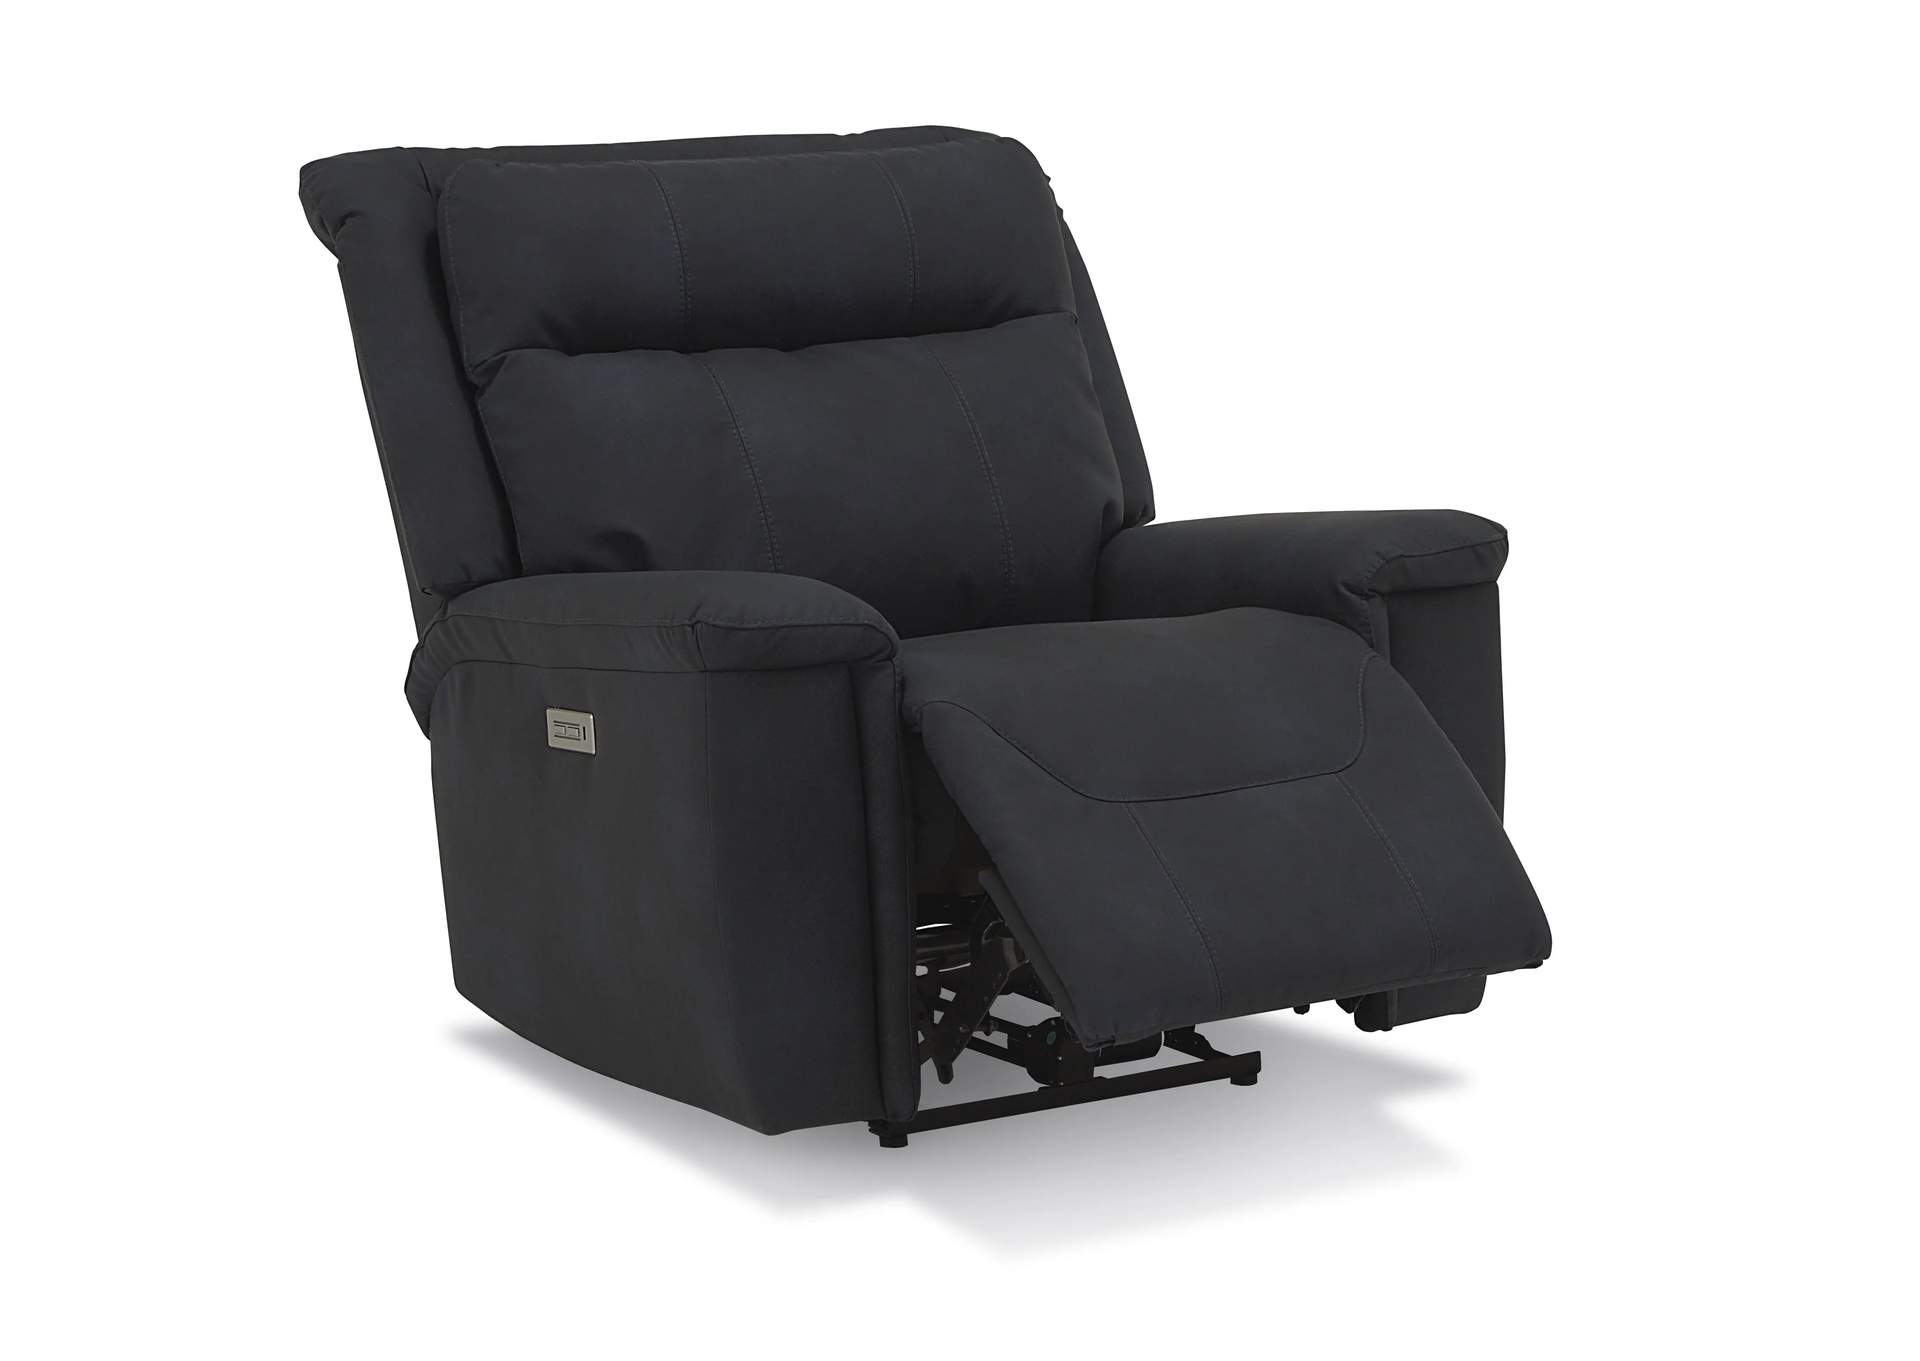 Strata Chair Wallhugger Pwr Recliner,Palliser Furniture